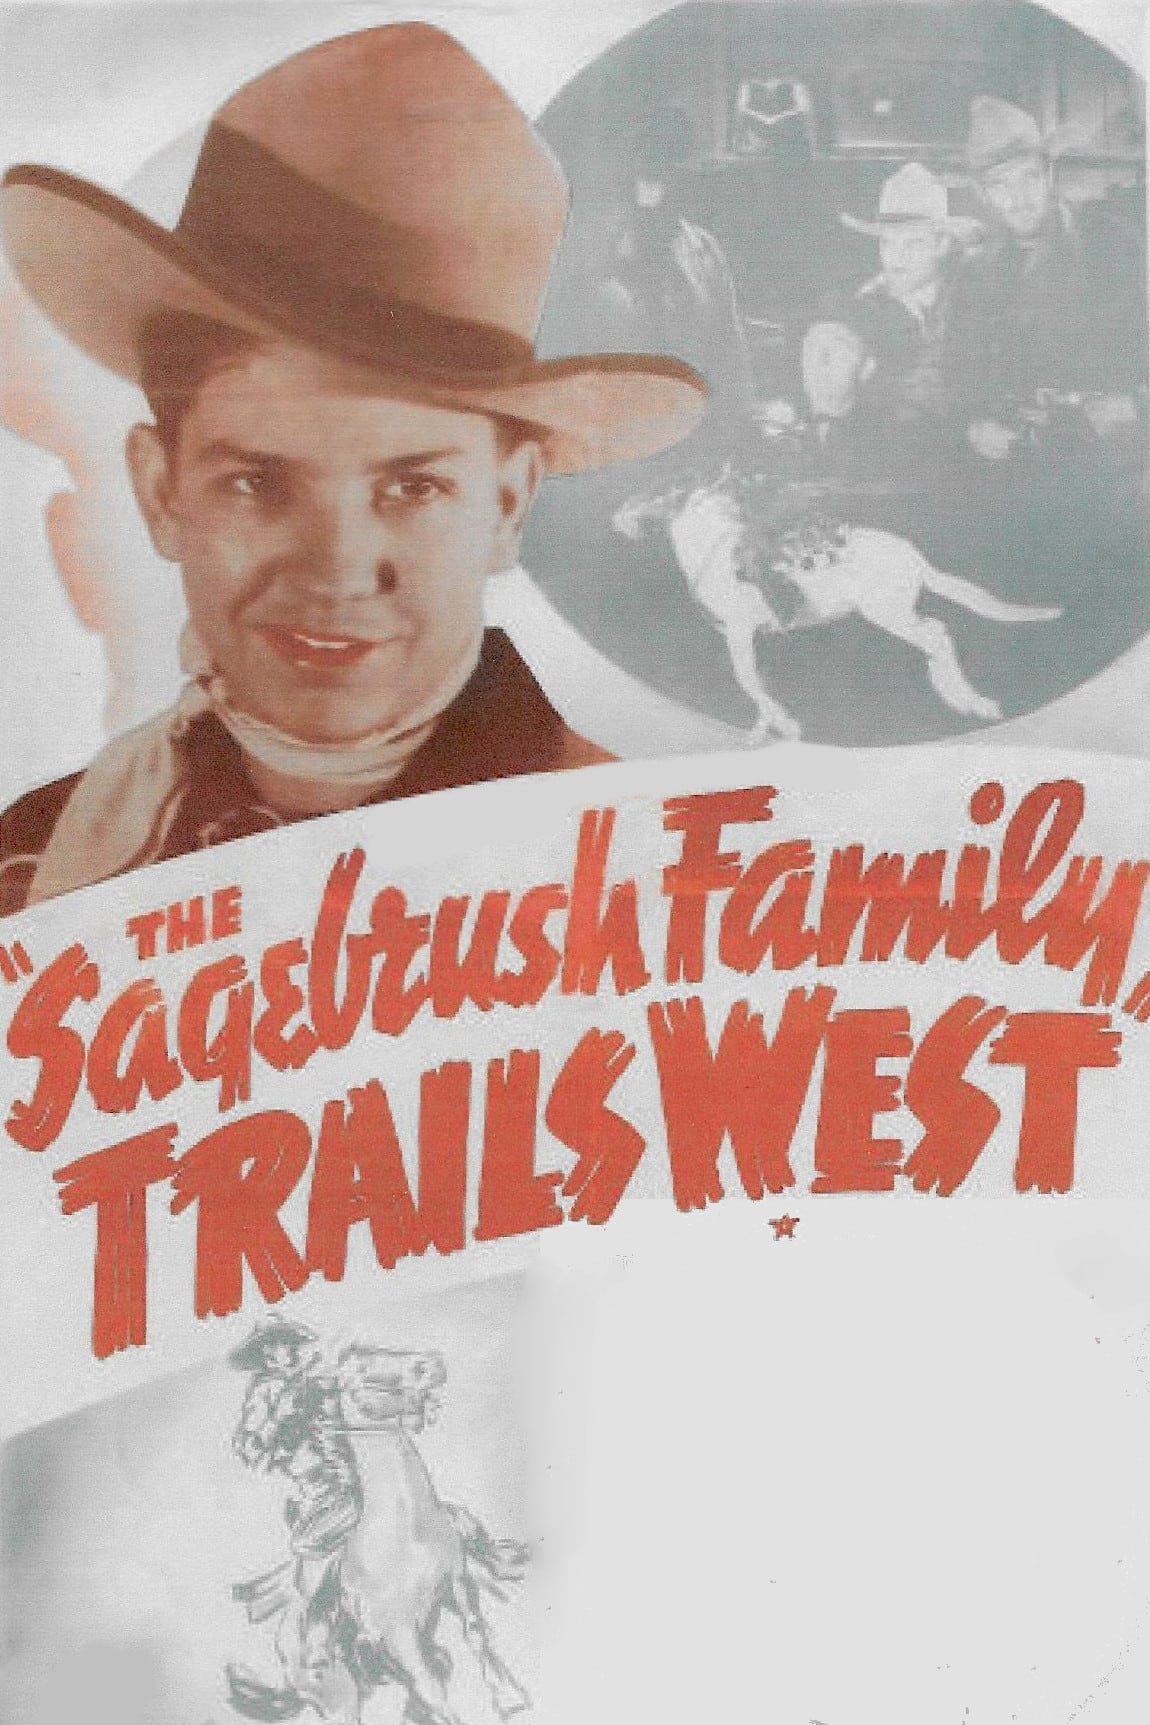 The Sagebrush Family Trails West